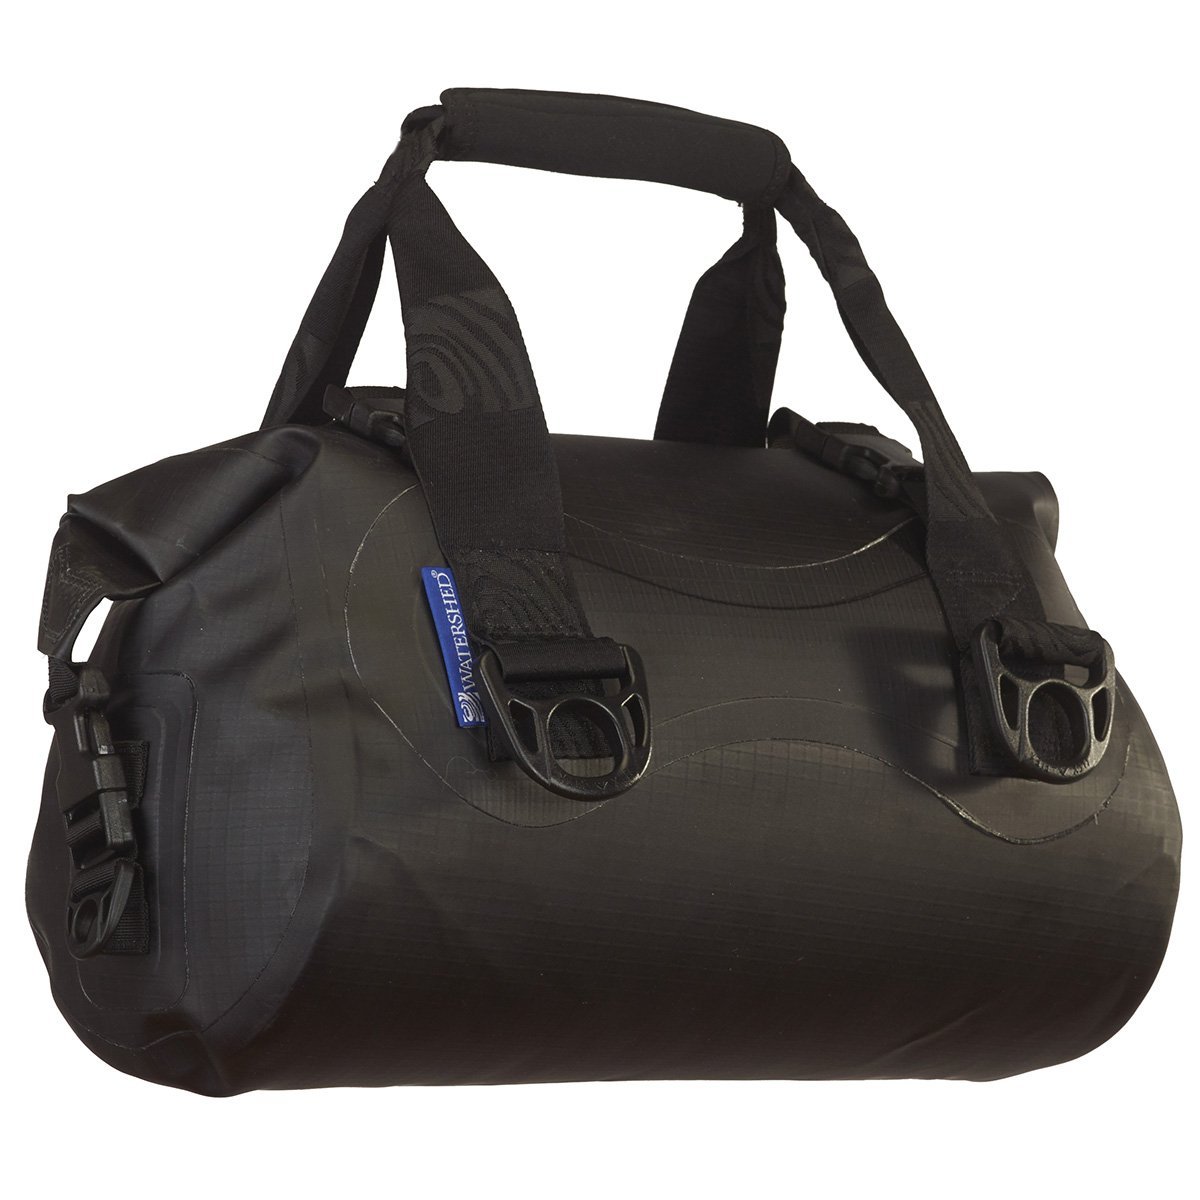 Ocoee duffel - 15 Litre - Dry Bags